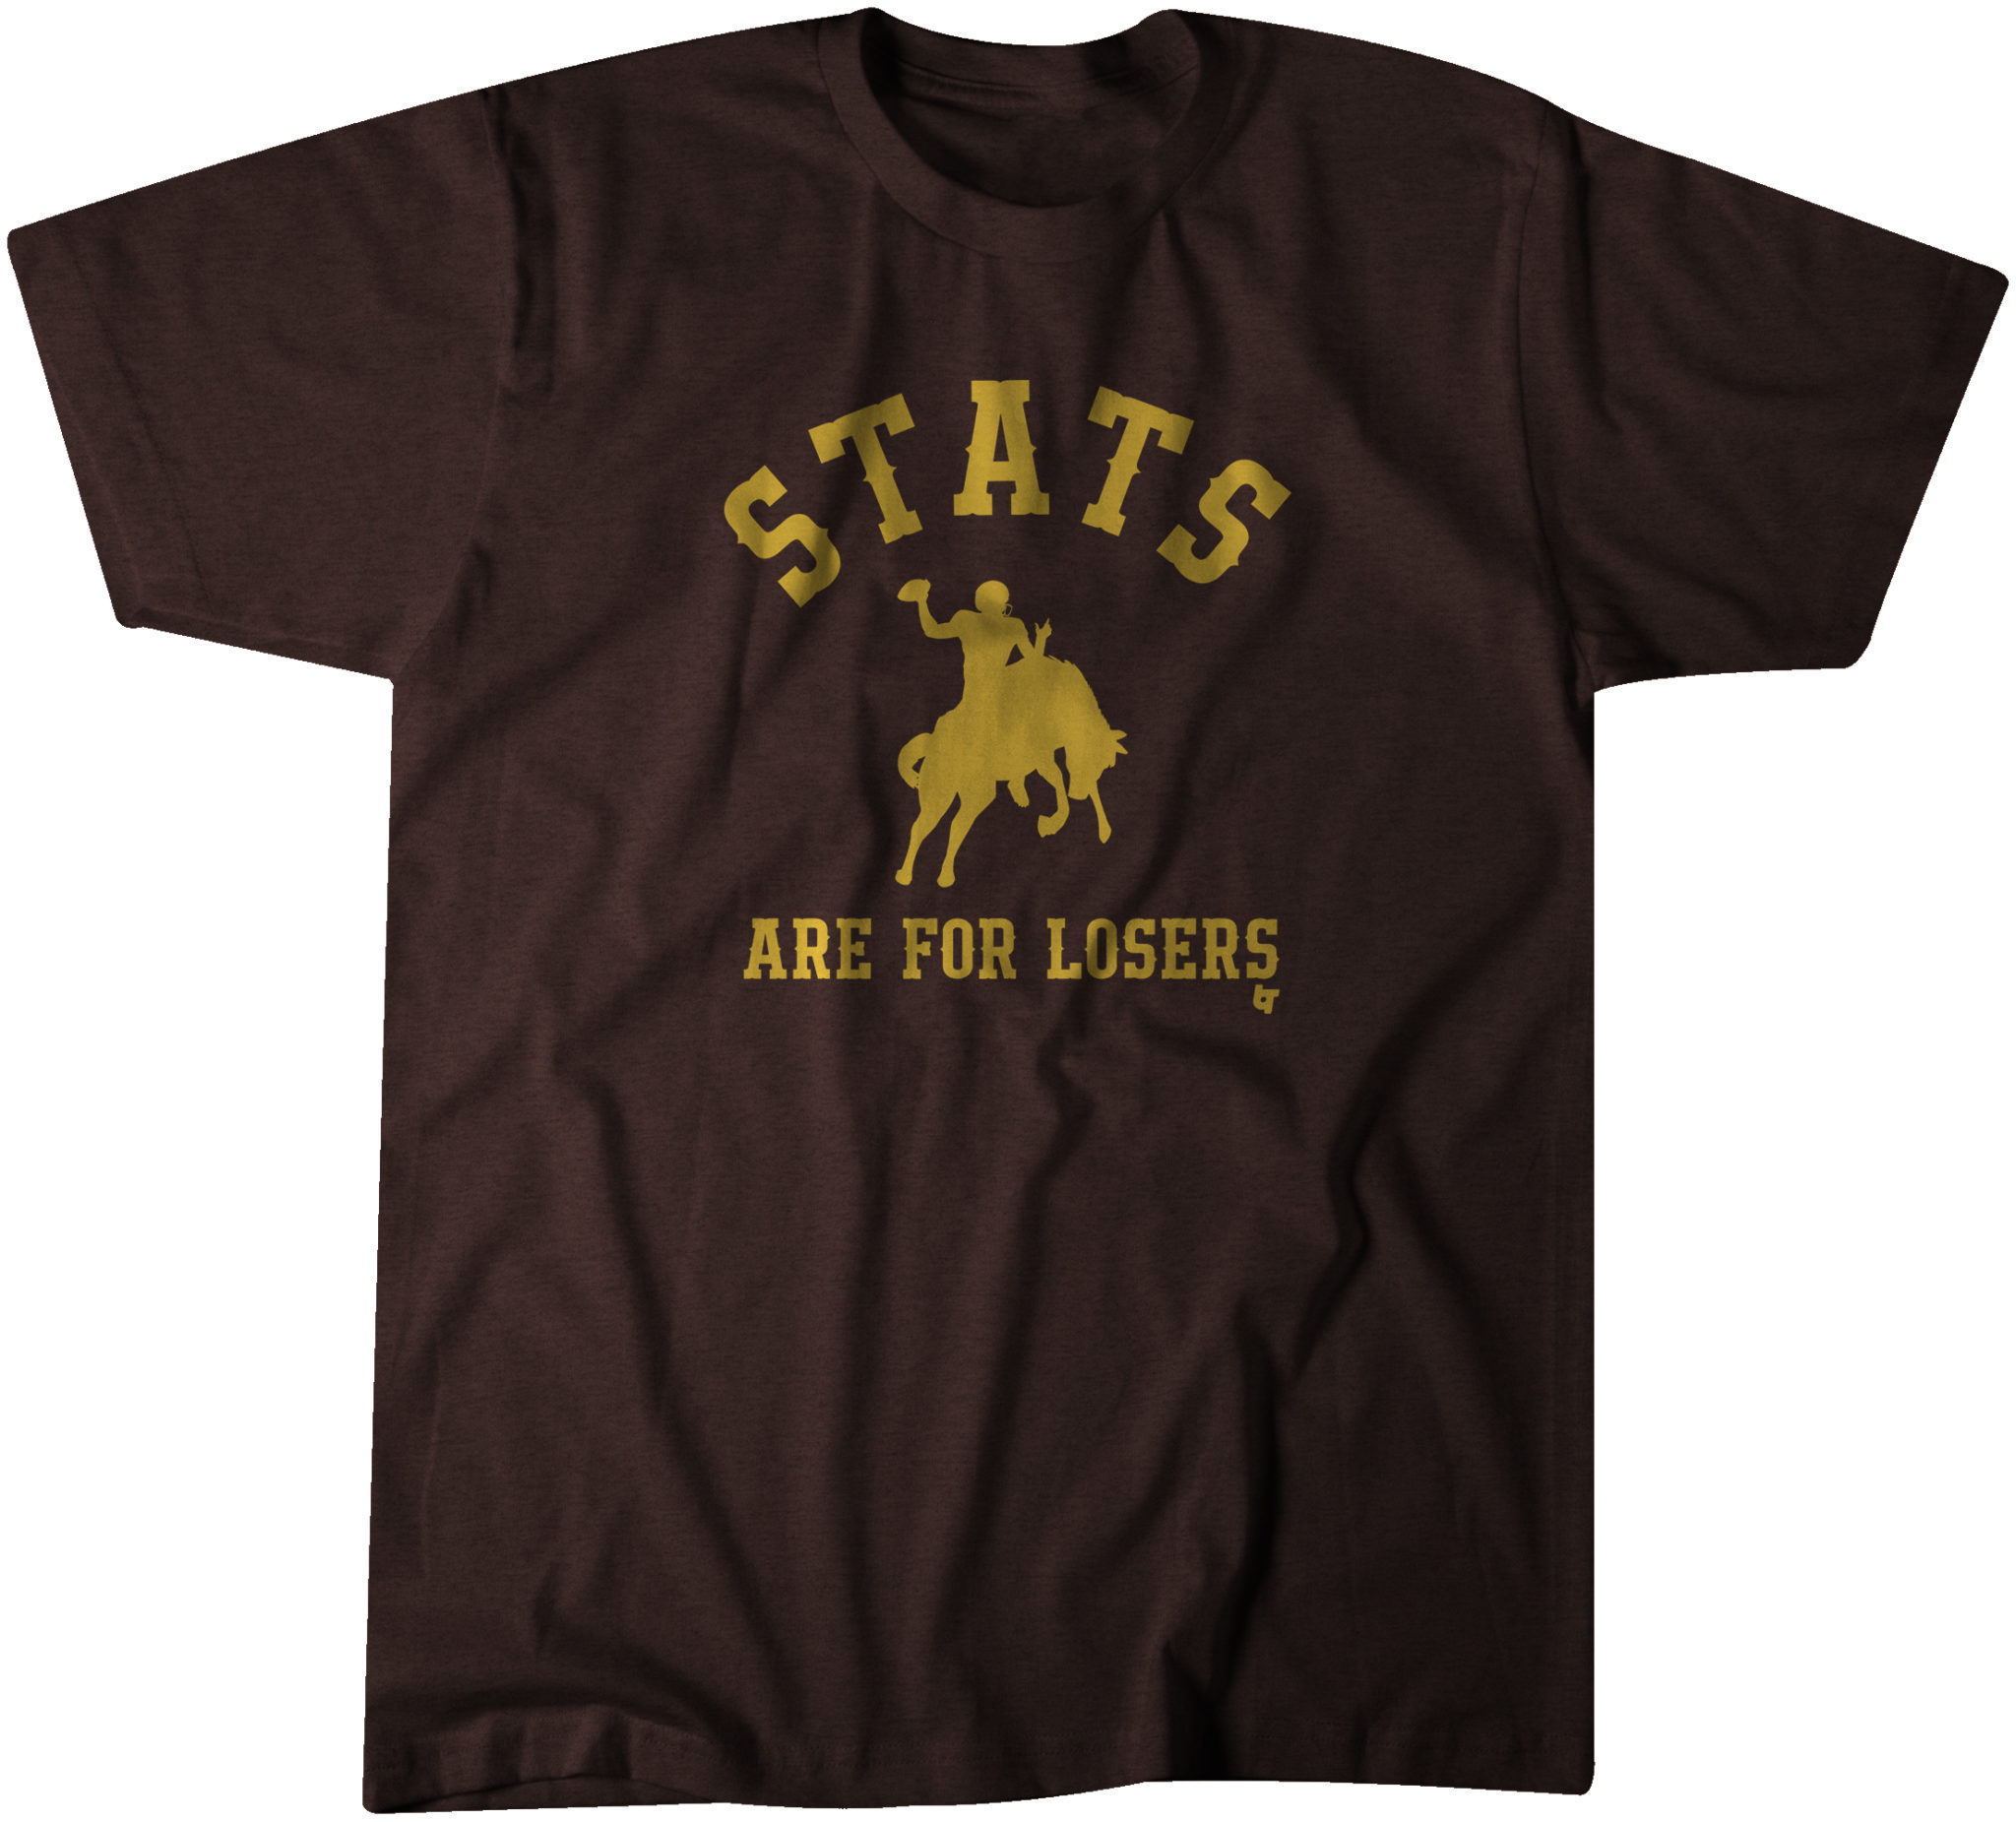 StatsAreForLosers_BreakingT_shirt.jpg